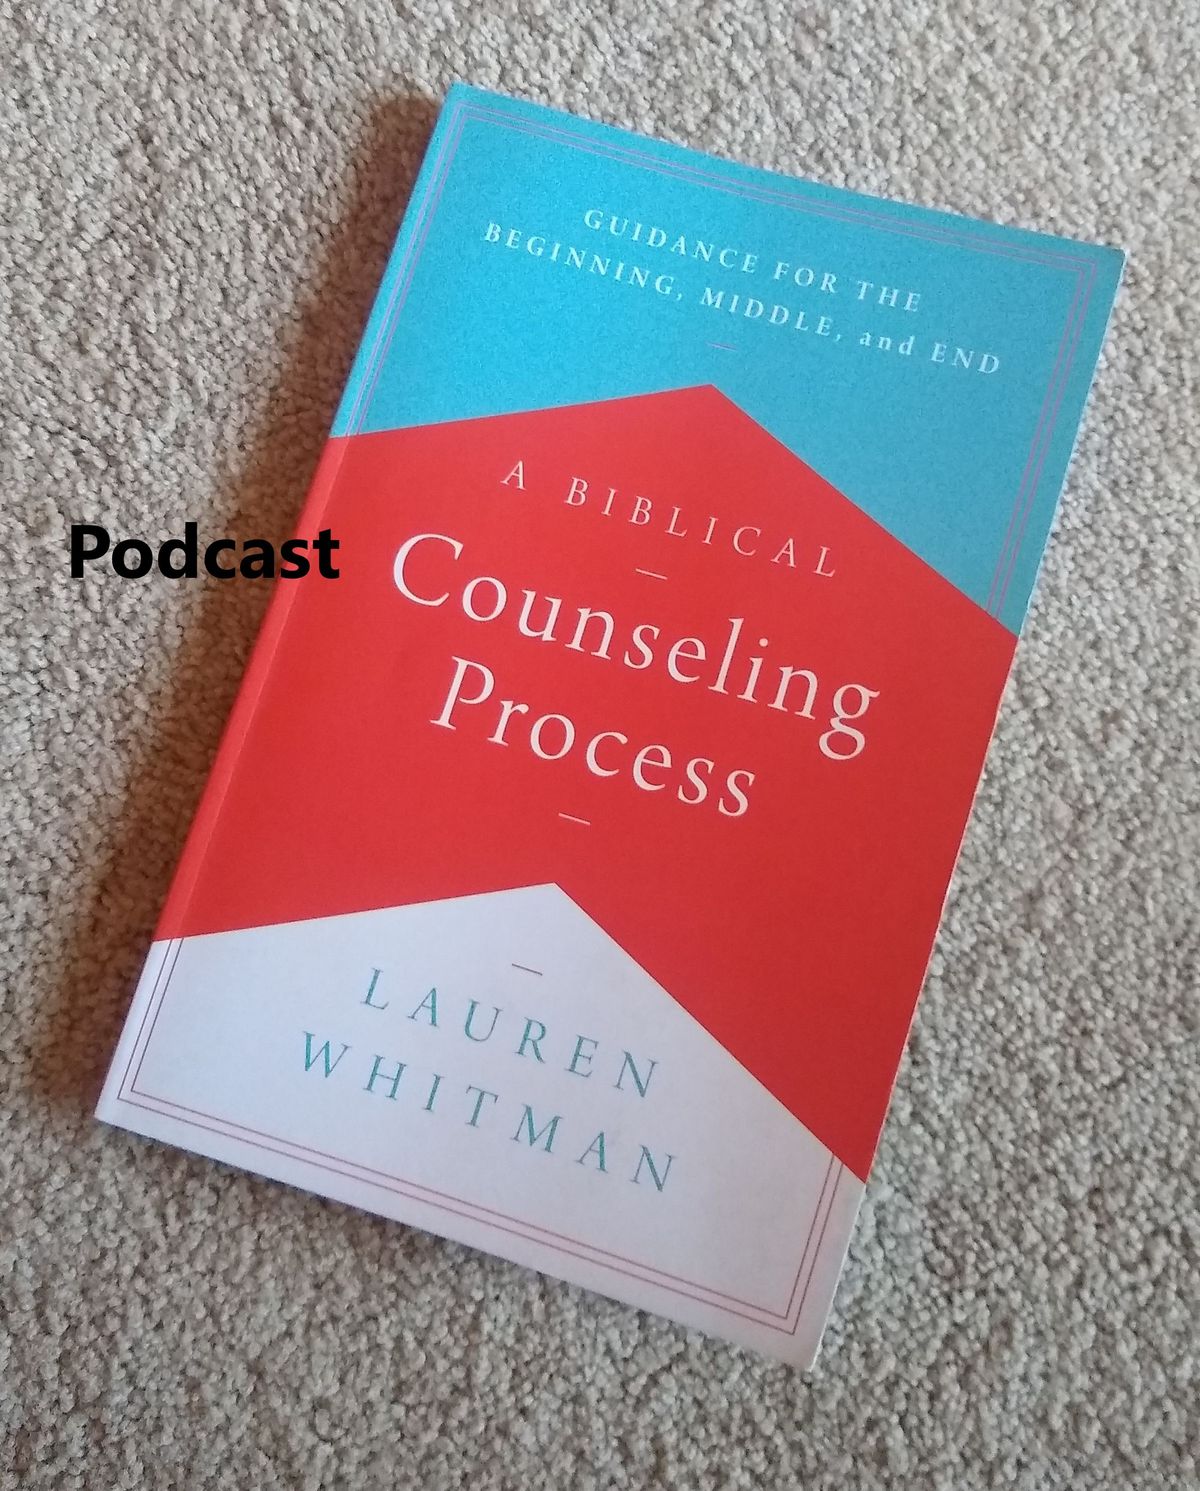 Resource Spotlight: Lauren Whitman, A Biblical Counseling Process (Podcast)